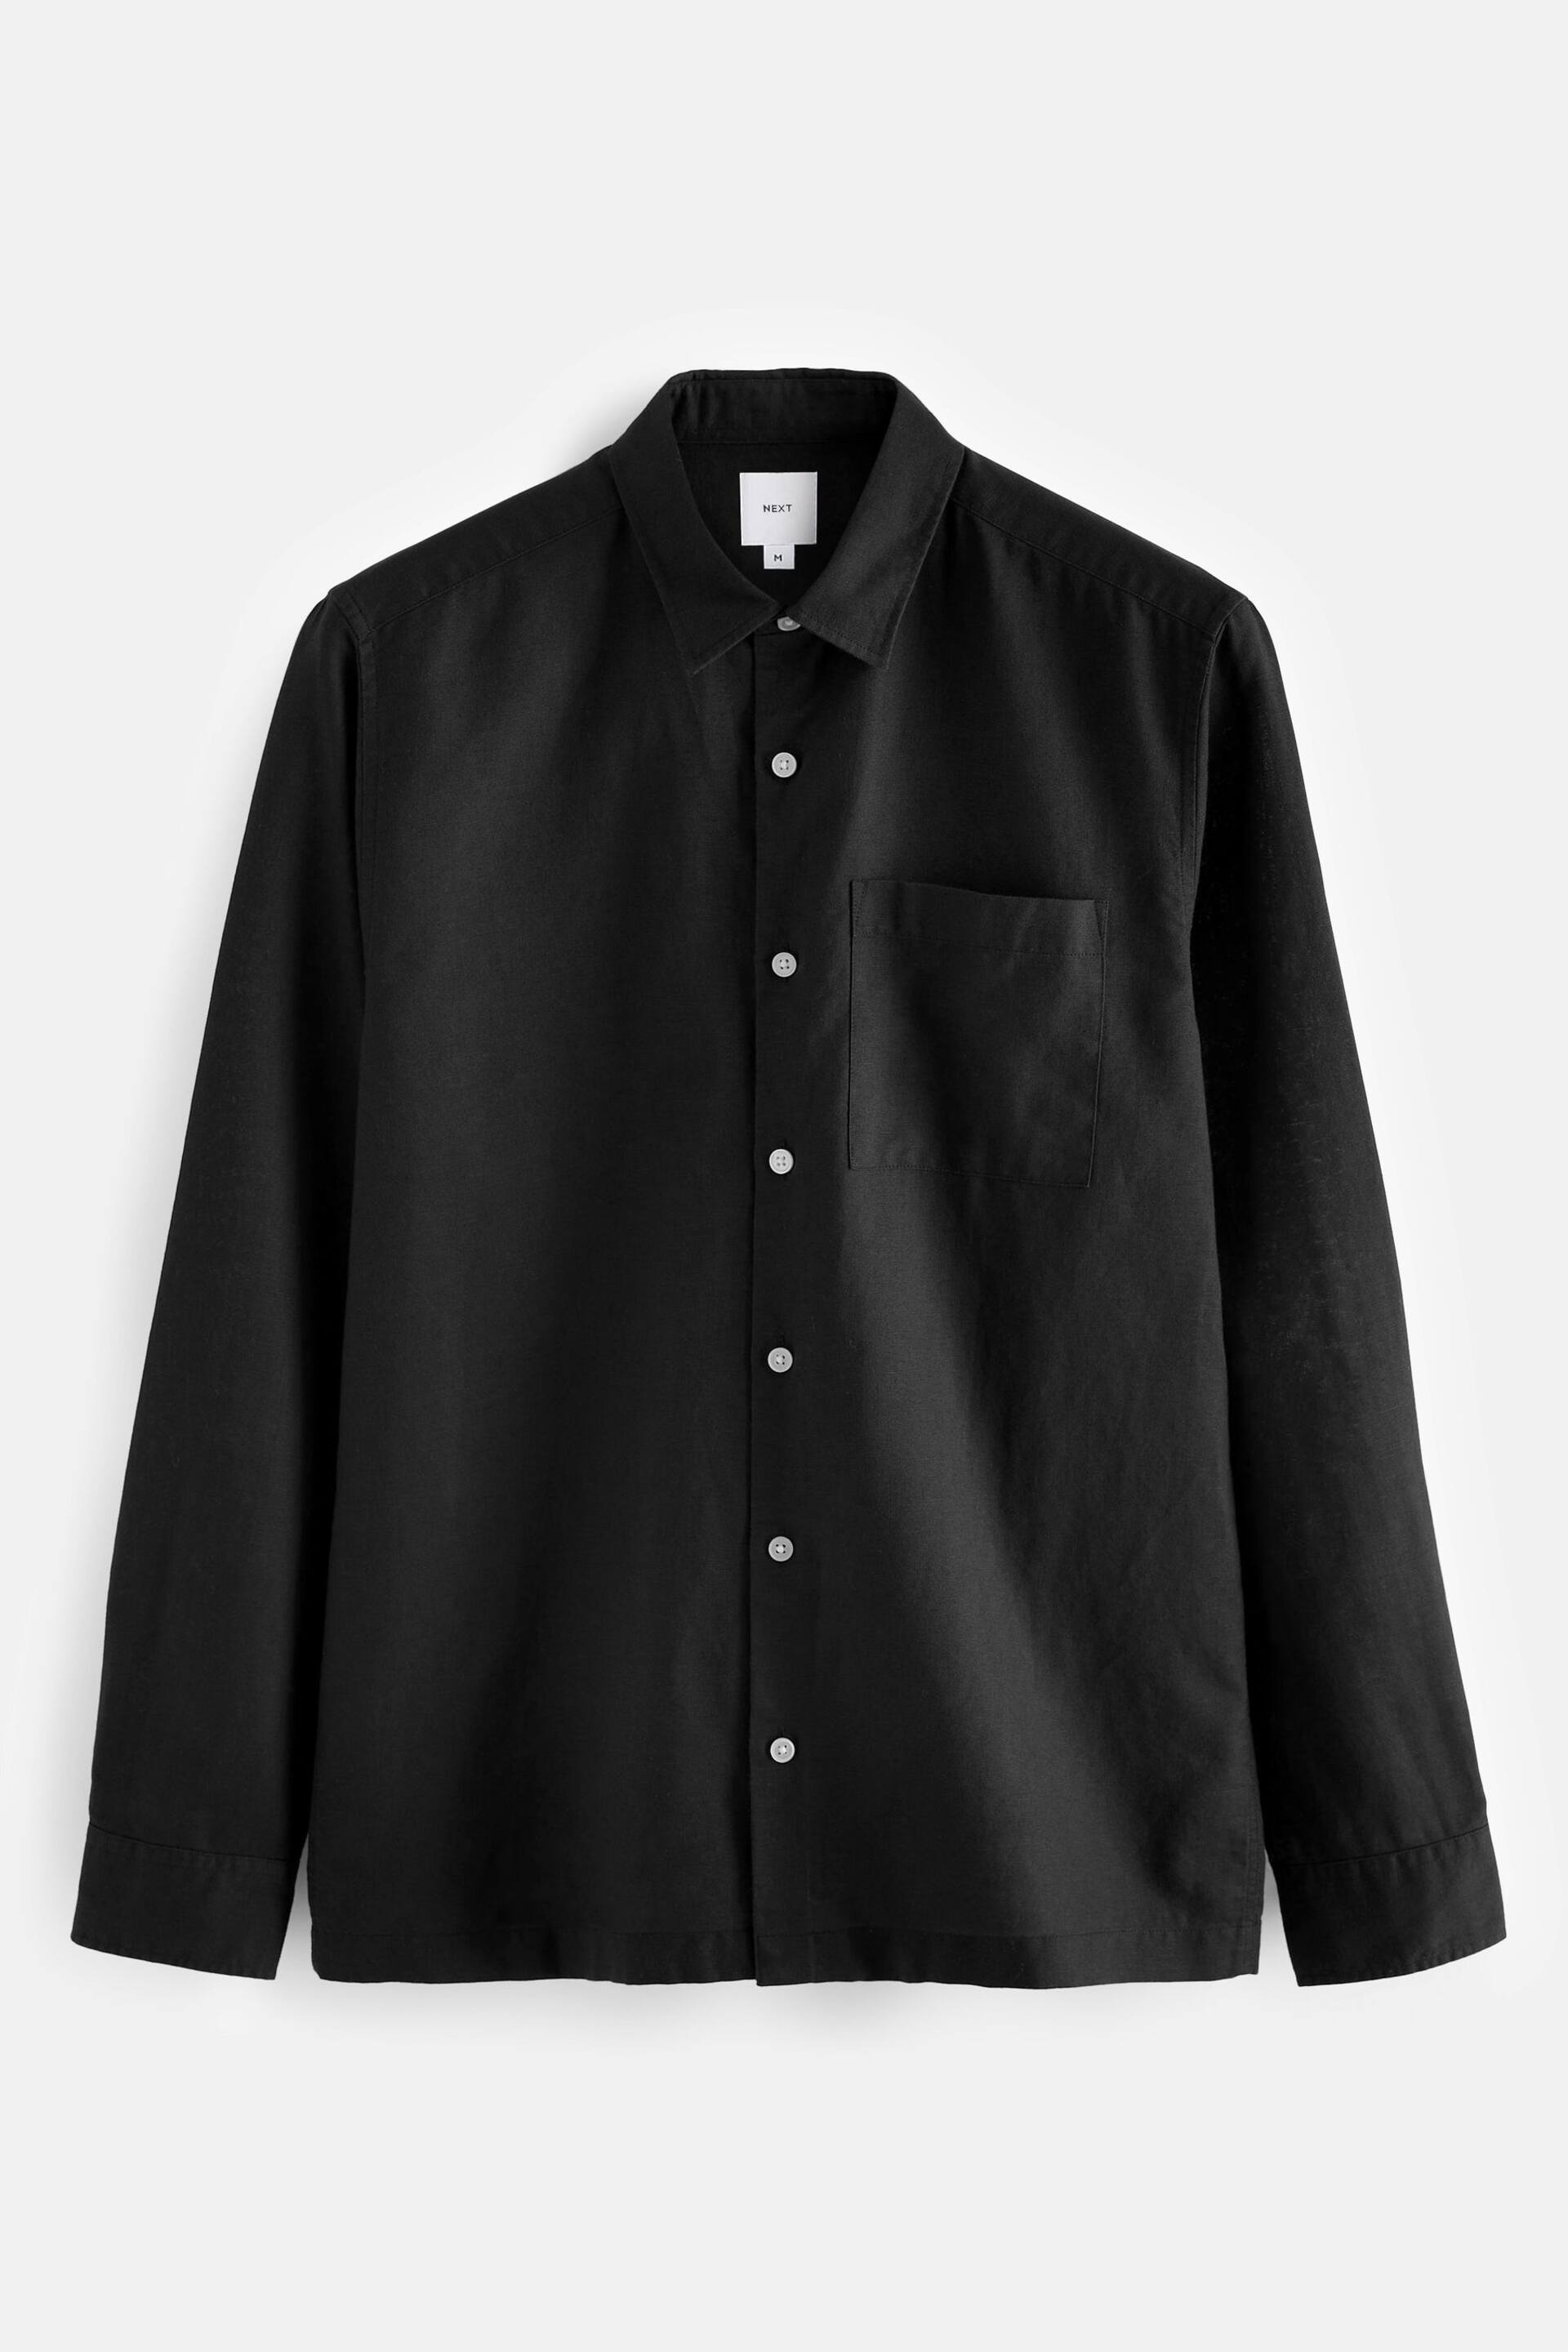 Black Linen Blend Long Sleeve Shirt - Image 6 of 7